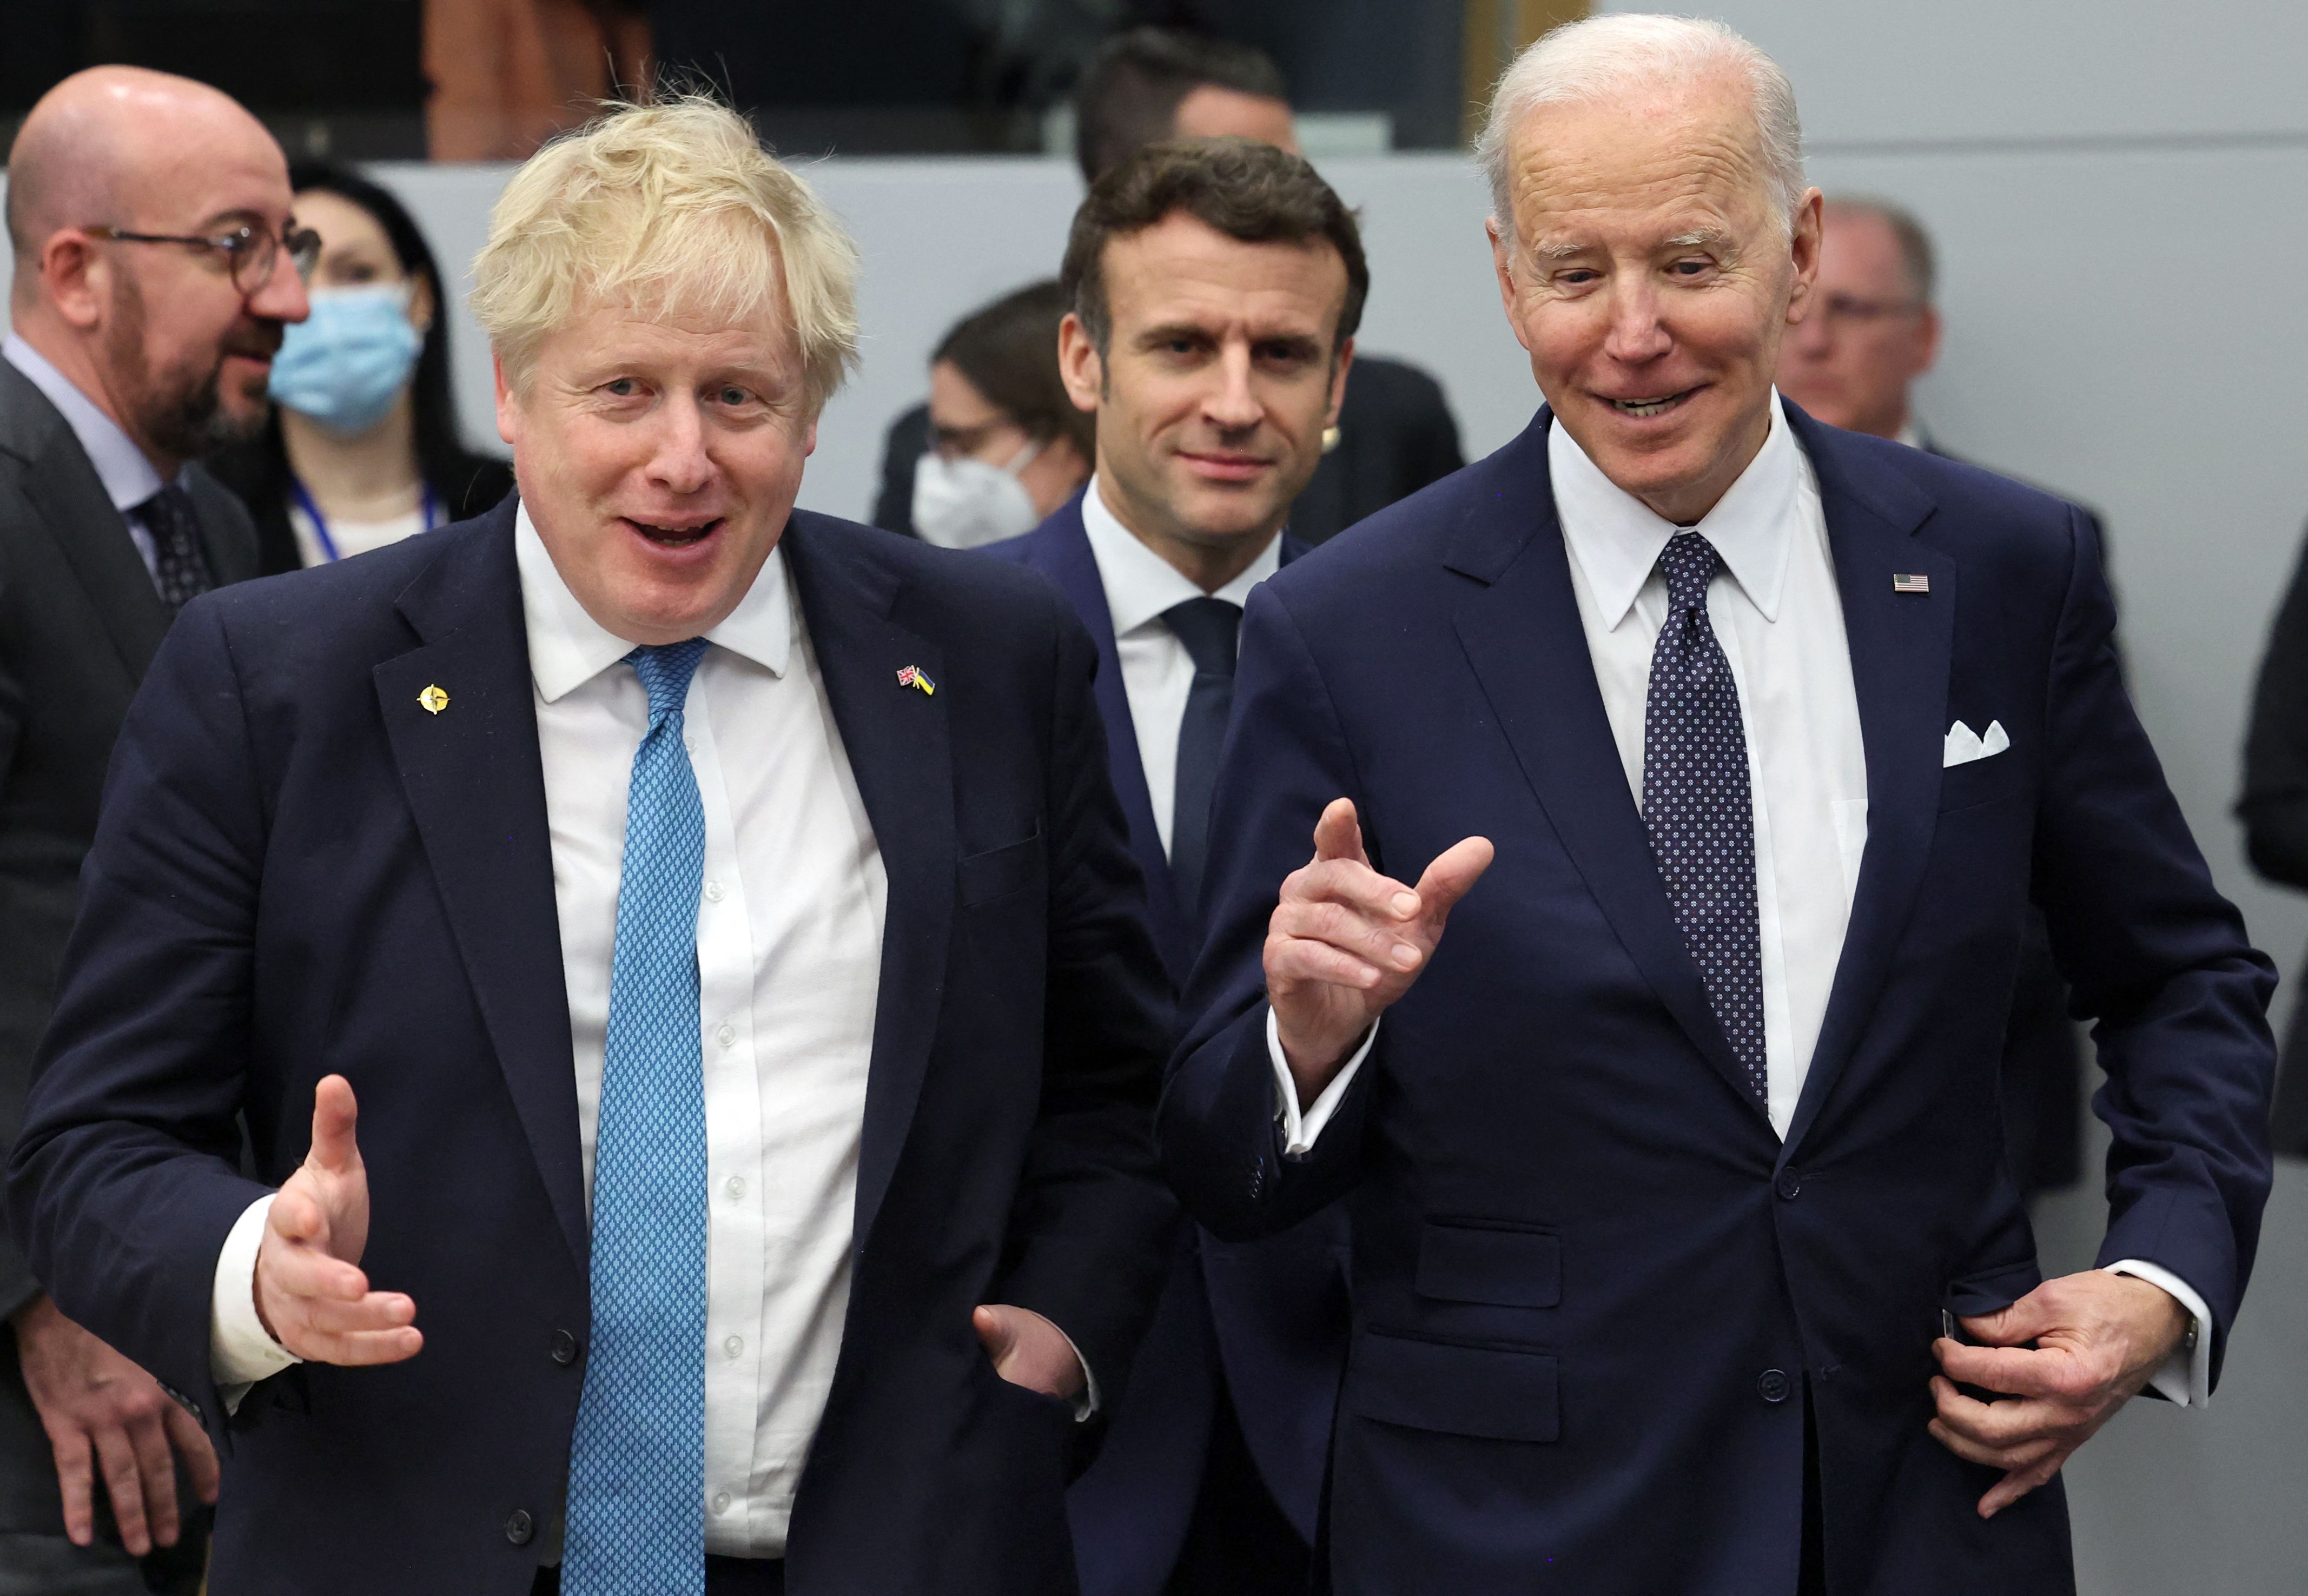 Britain's Prime Minister Boris Johnson, left, talks with US President Joe Biden ahead of a G7 summit in Brussels, Belgium, on March 24.